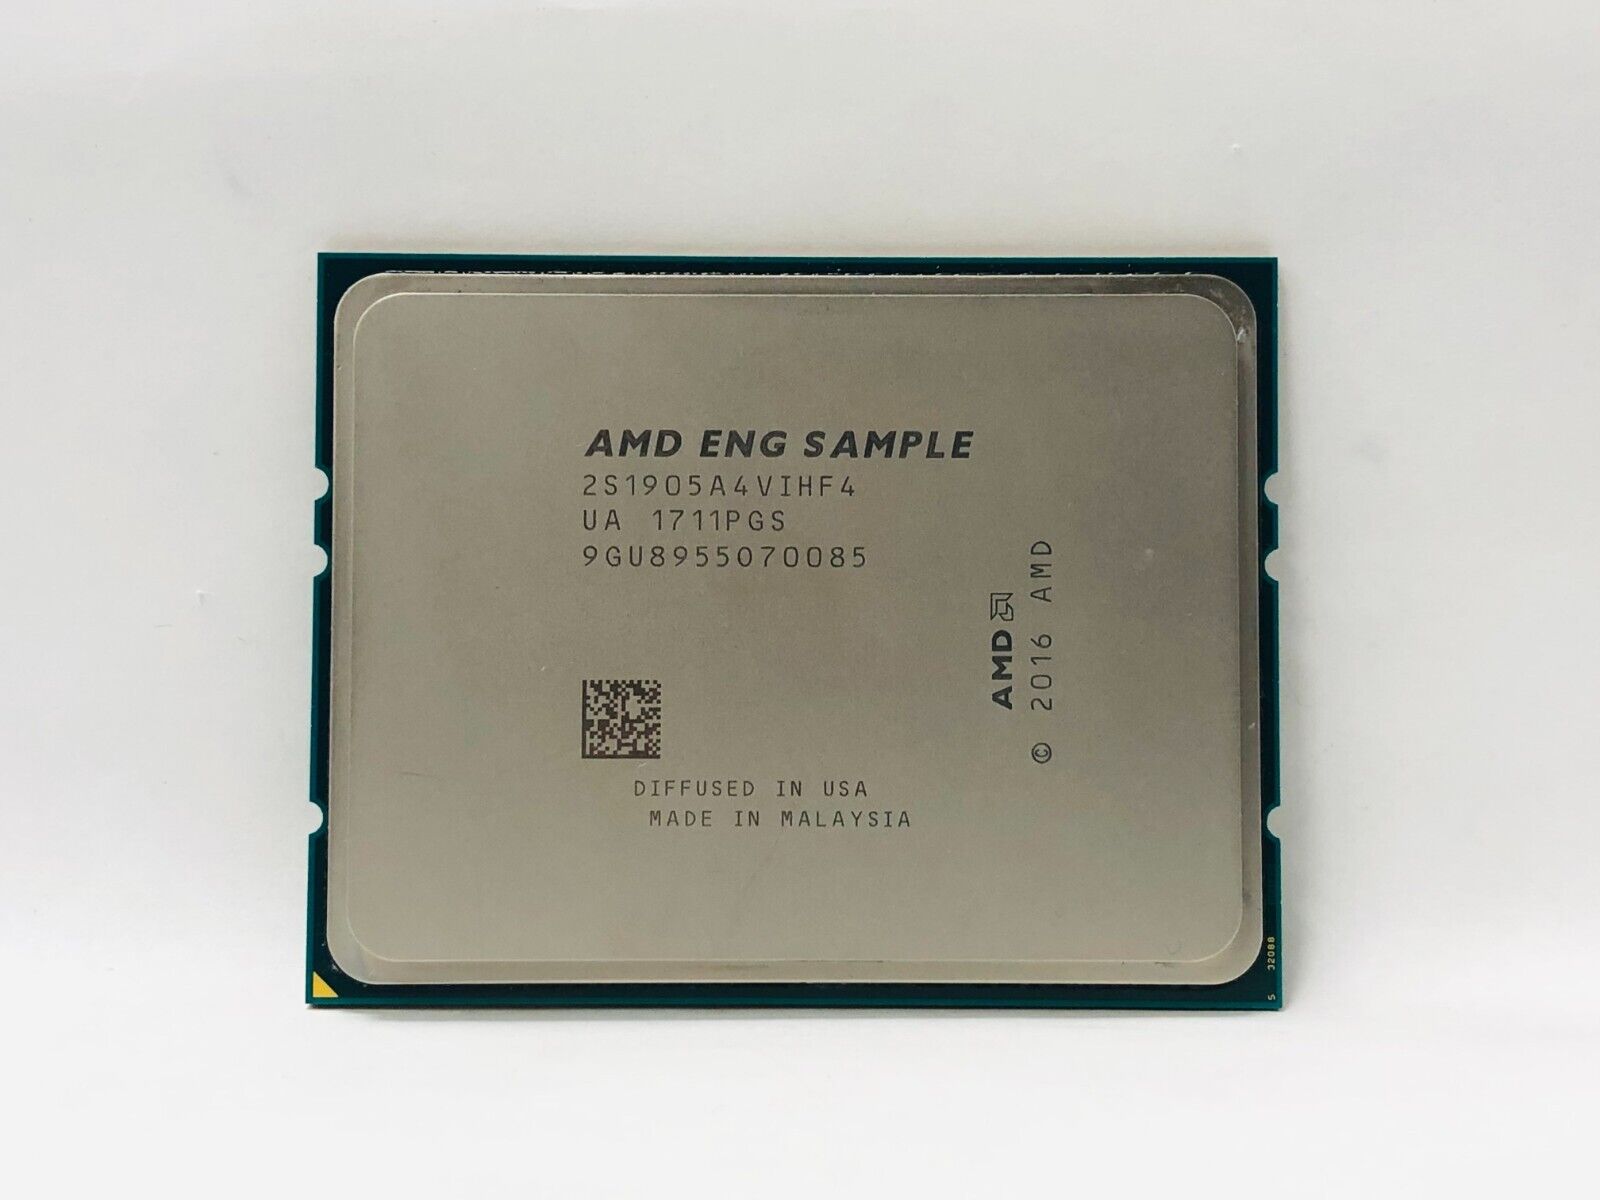 AMD Eng Sample 2S1905A4VIHF4 1.90GHZ 64MB 32-Core 180W CPU PROCESSOR